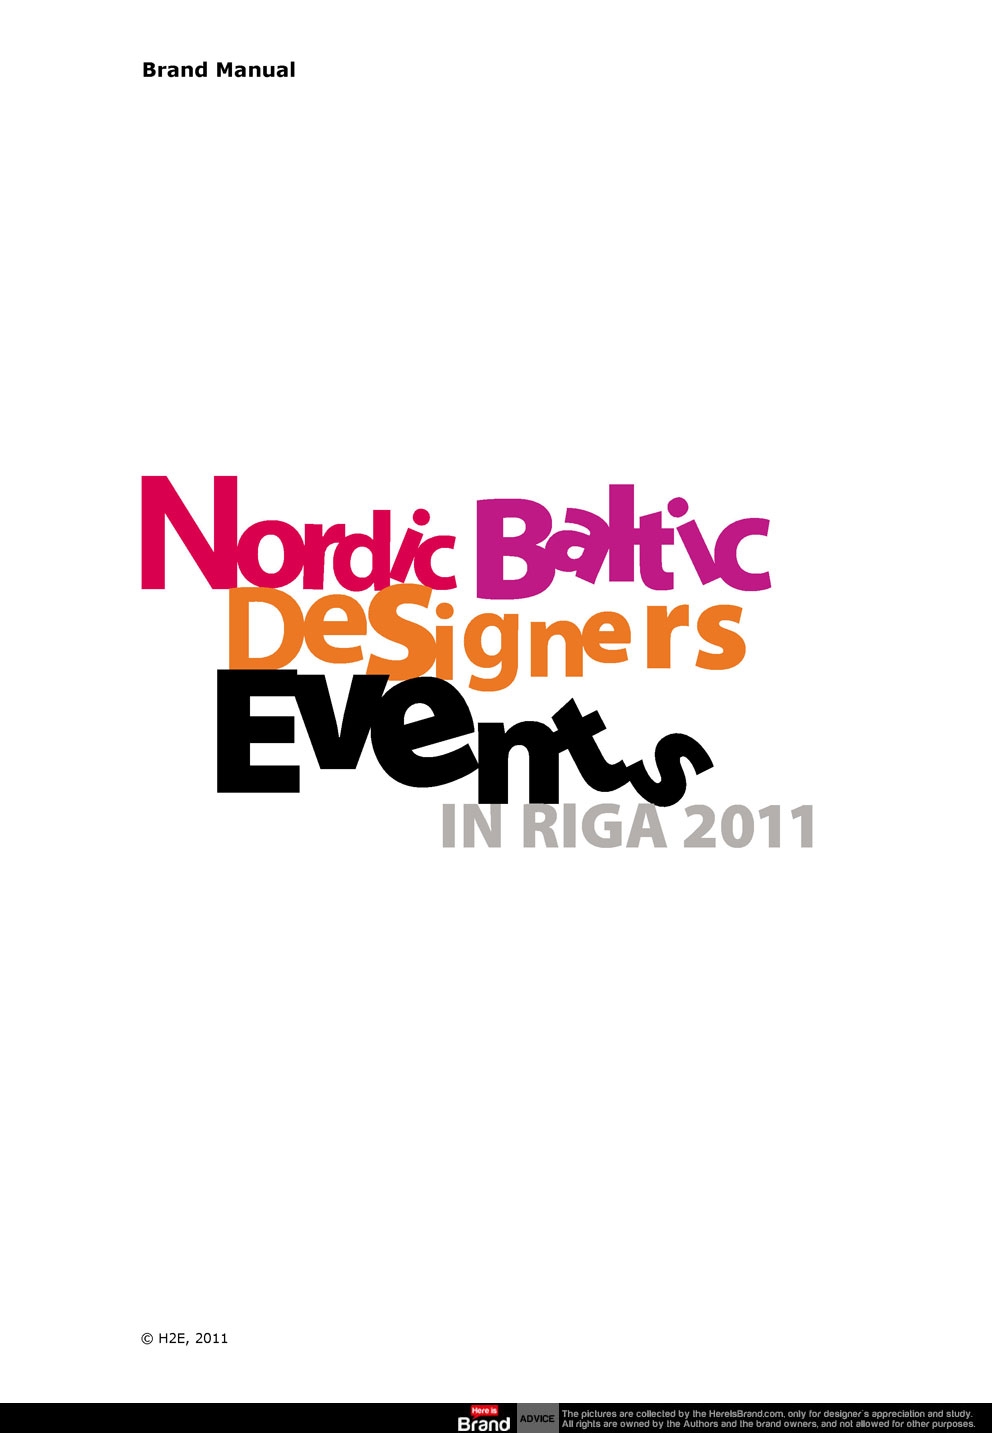 Nordic Baltic Designers Events brand manual